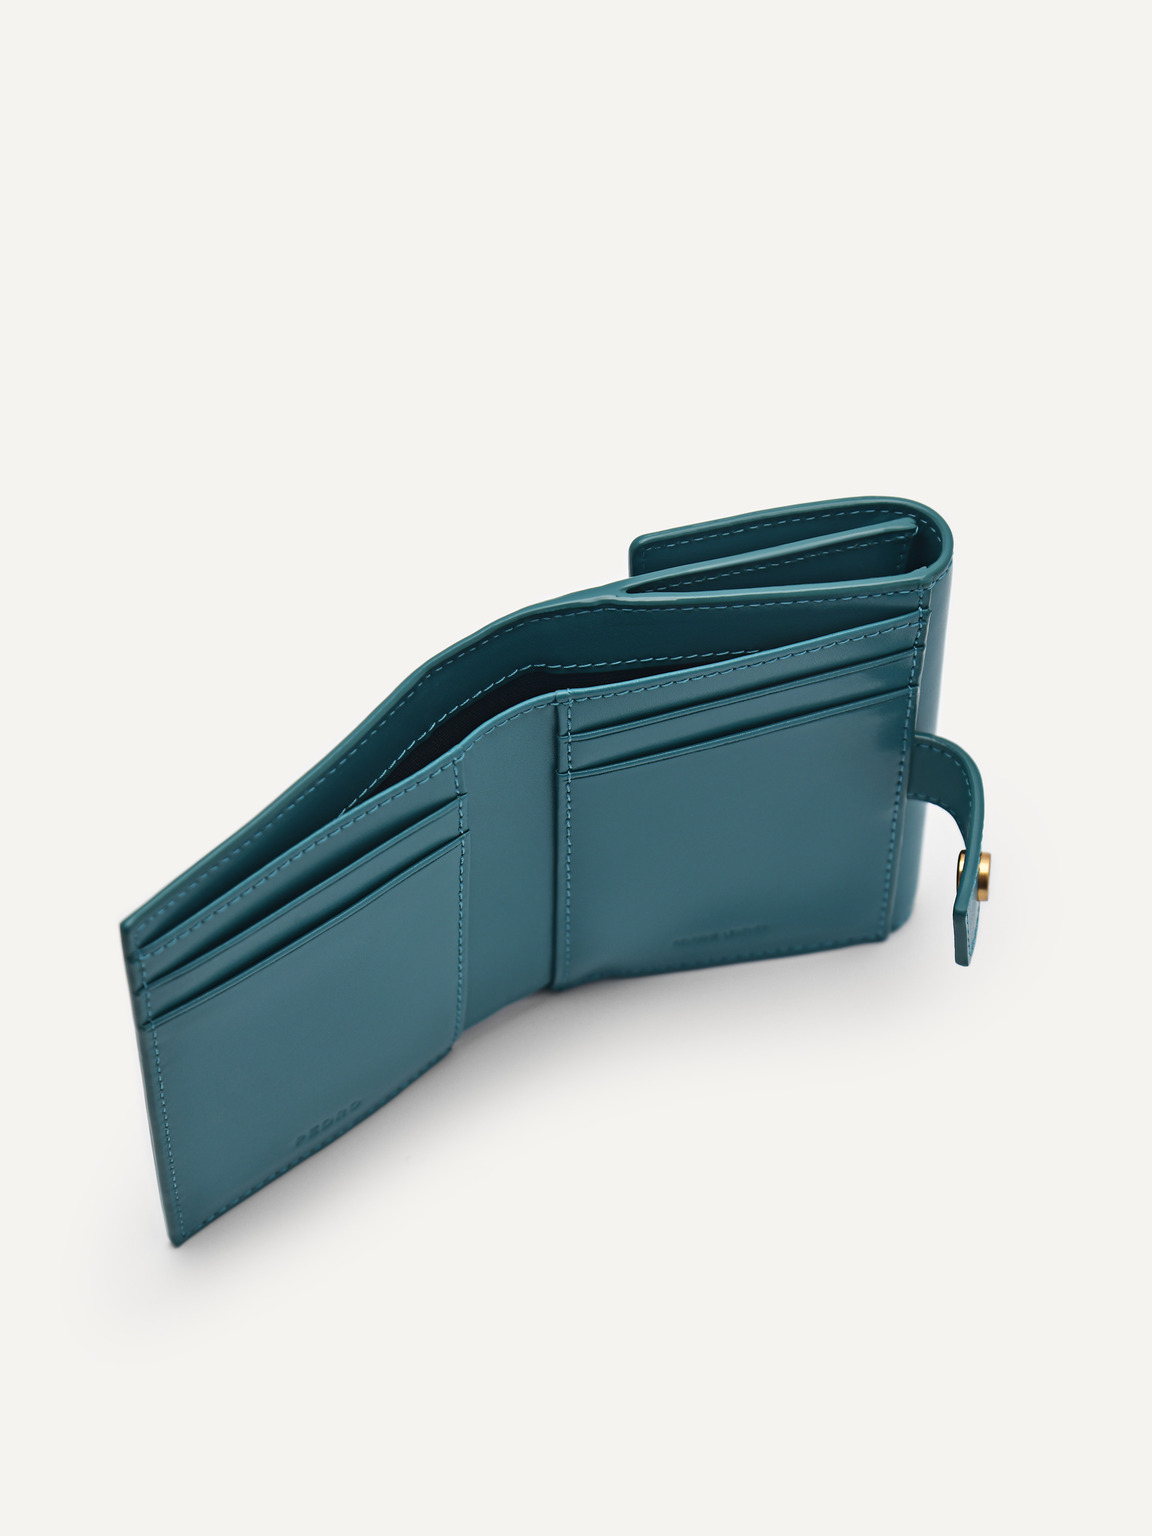 PEDRO Studio Leather Tri-Fold Wallet, Teal